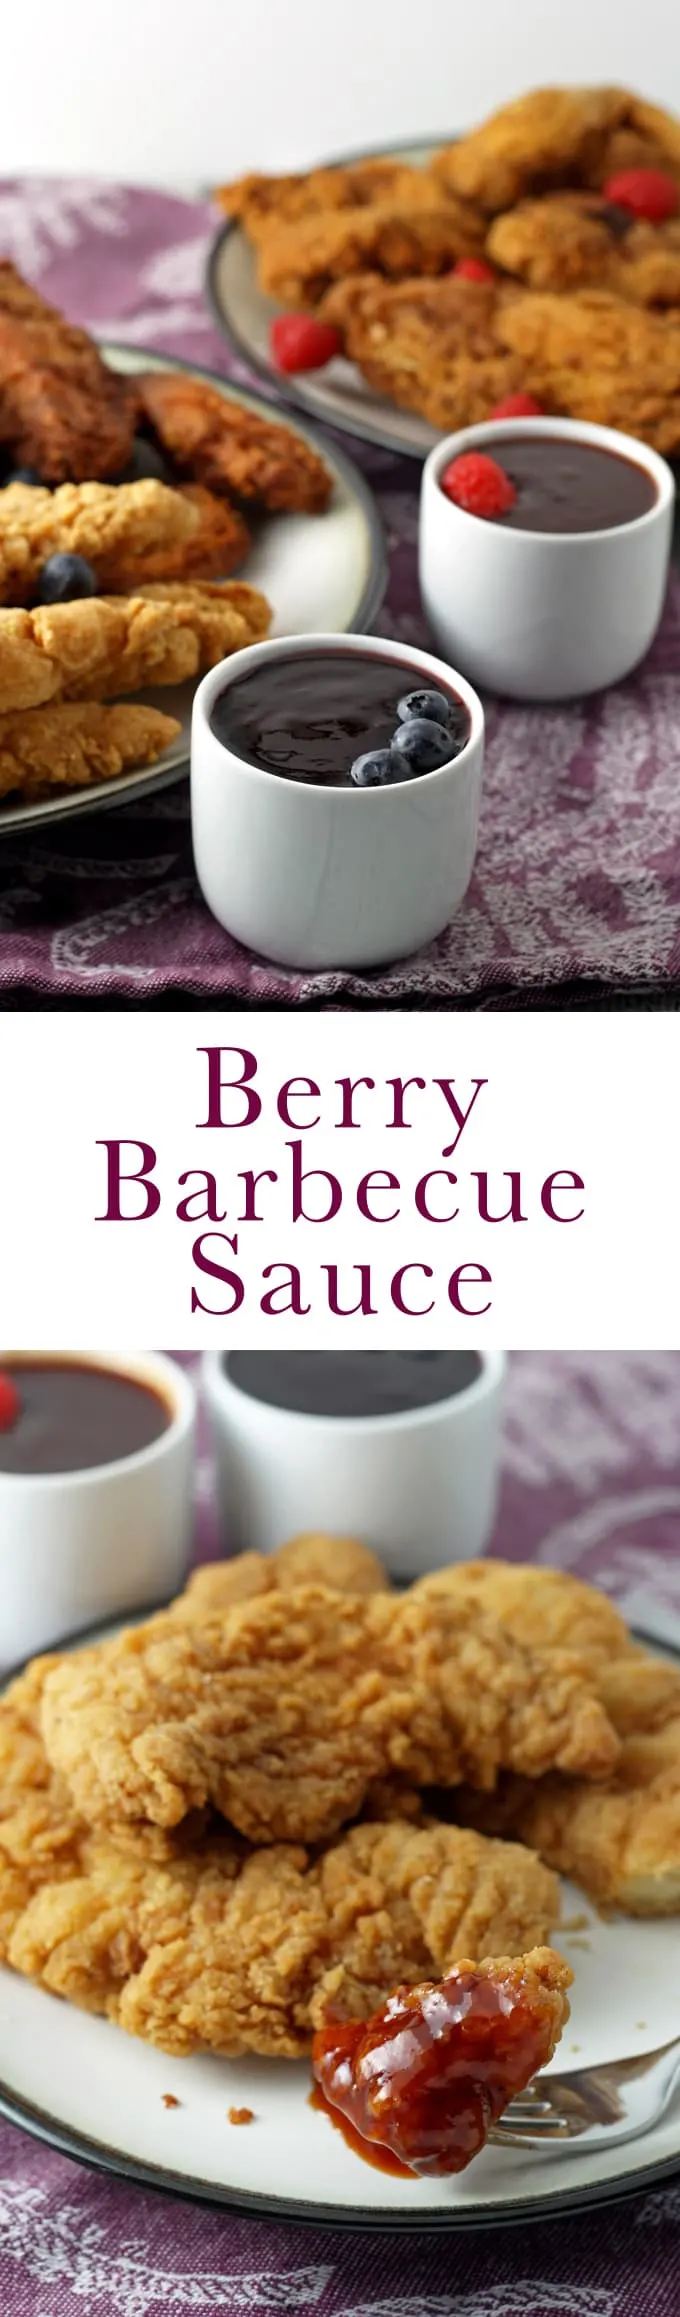 Berry Barbecue Sauce - perfect for dipping chicken! | honeyandbirch.com